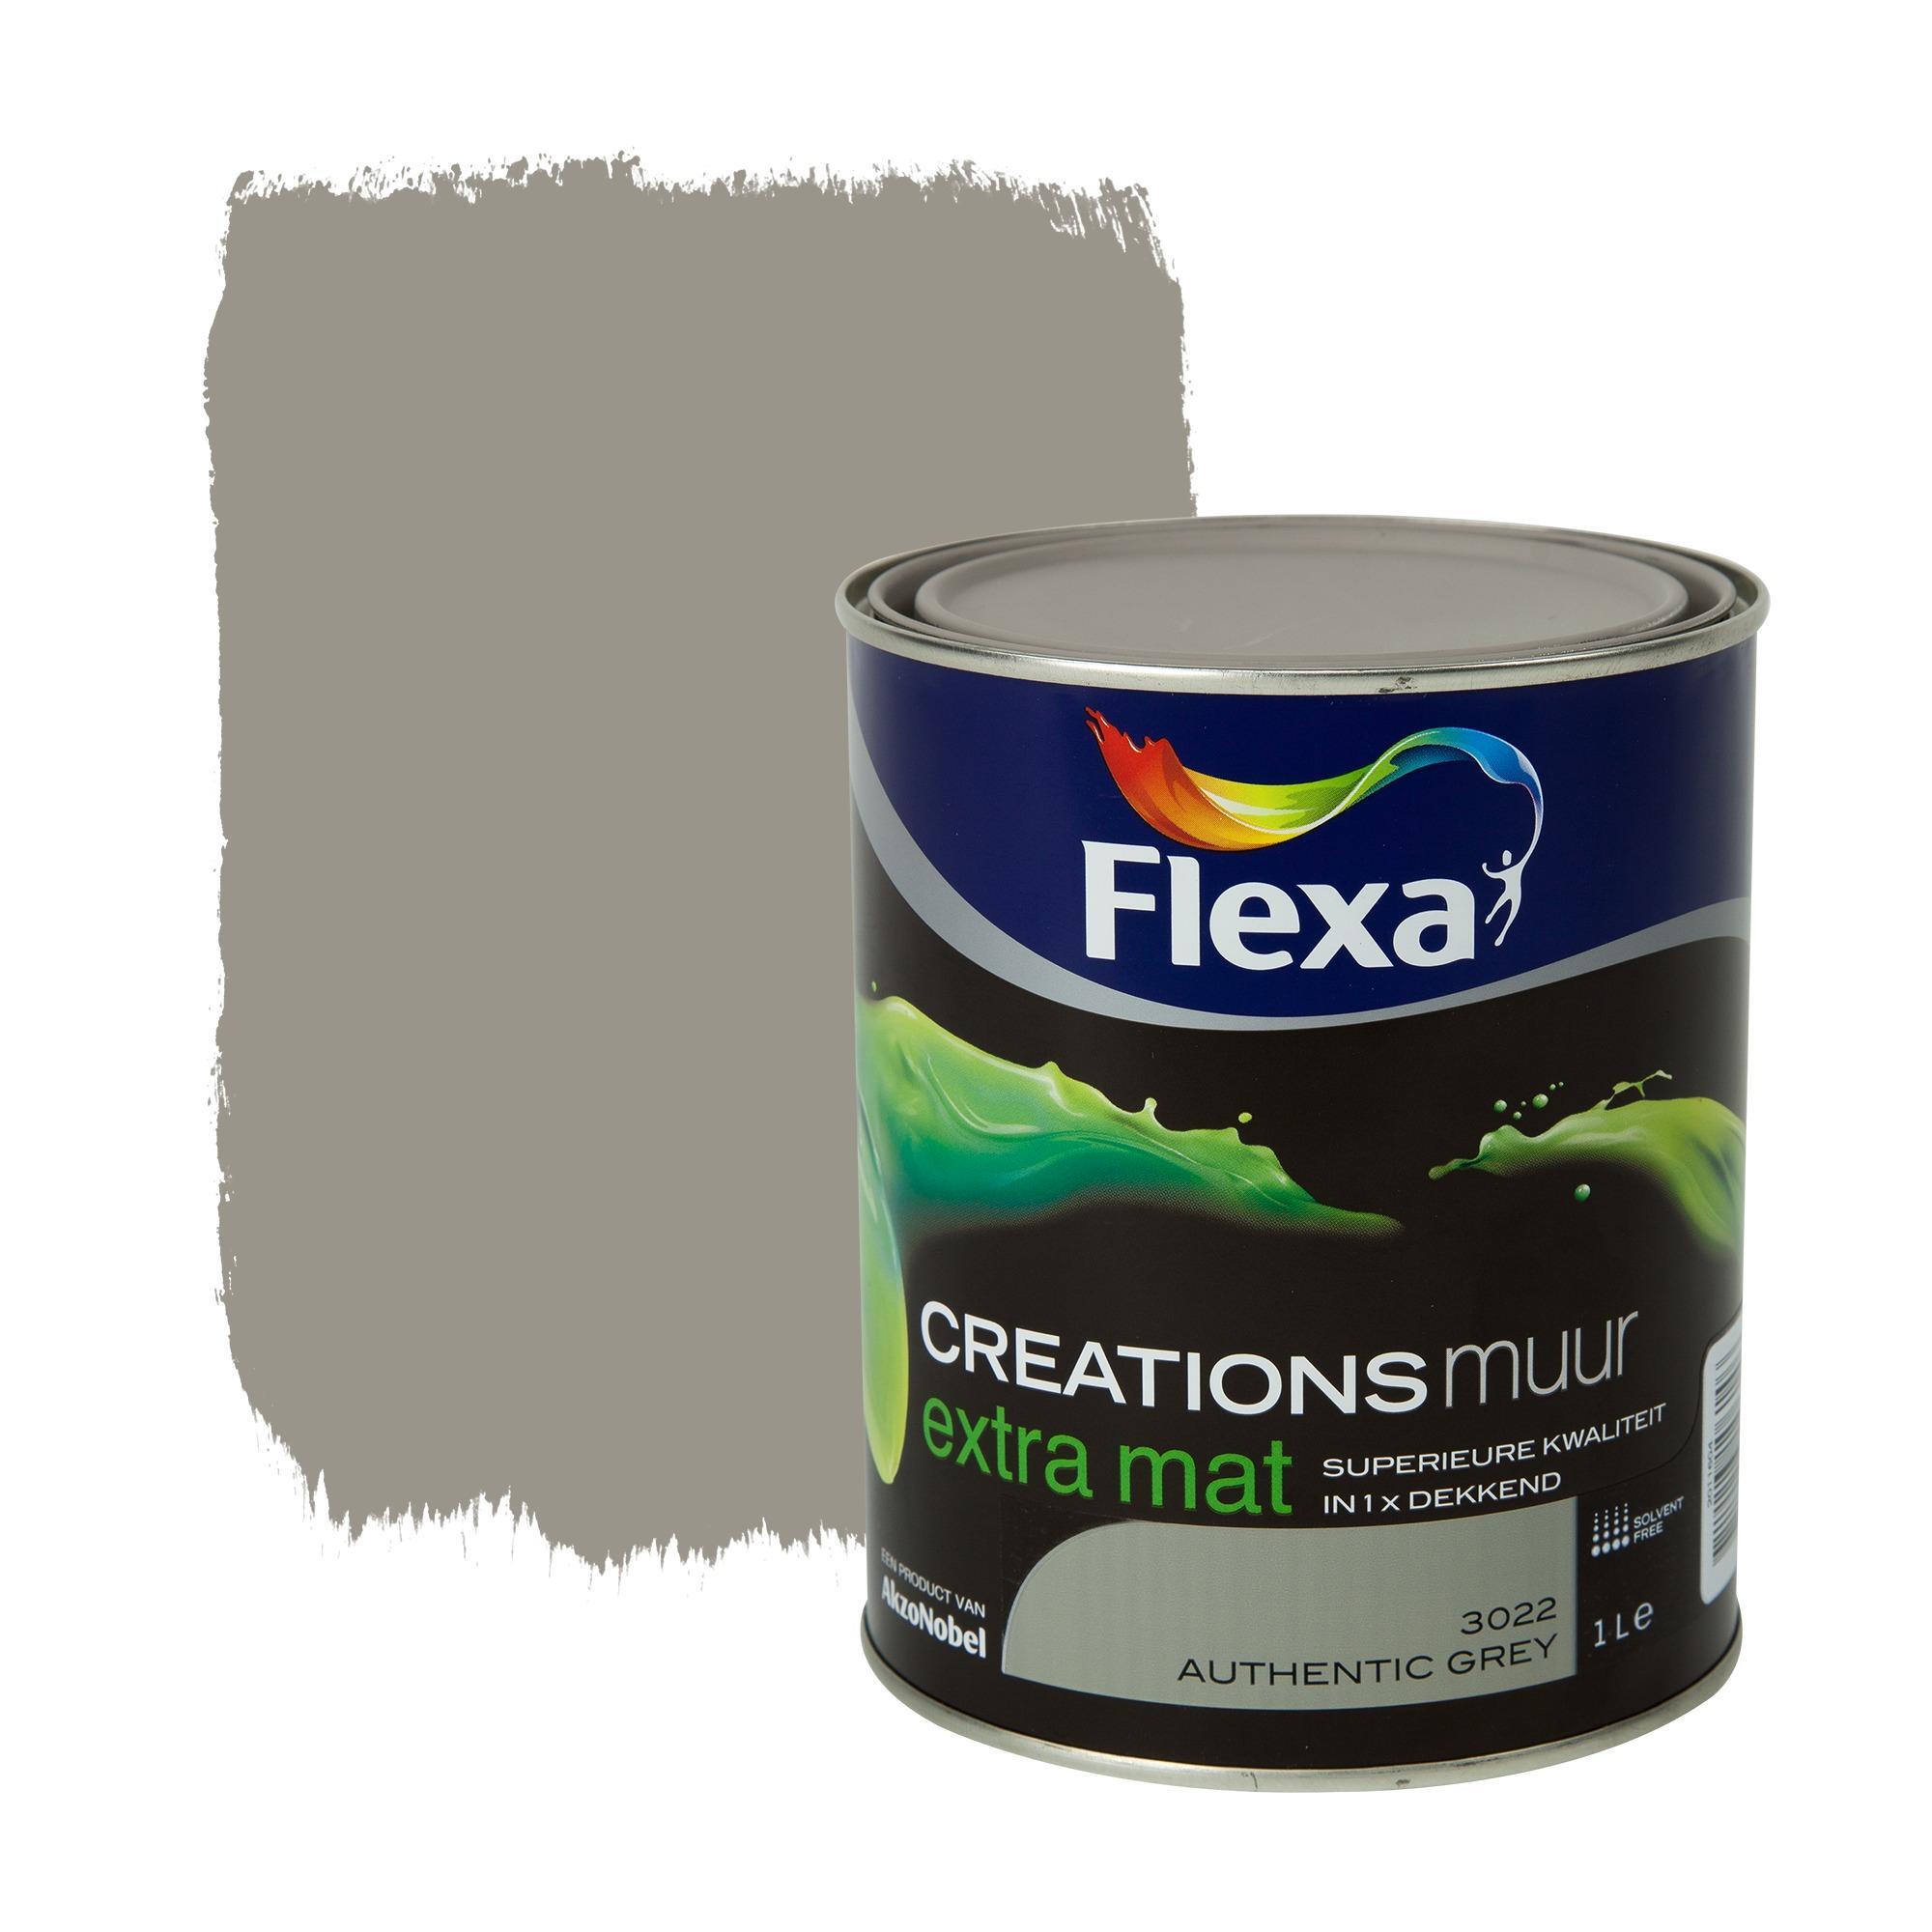 FLEXA Creations muurverf authentic grey extra mat 1 liter